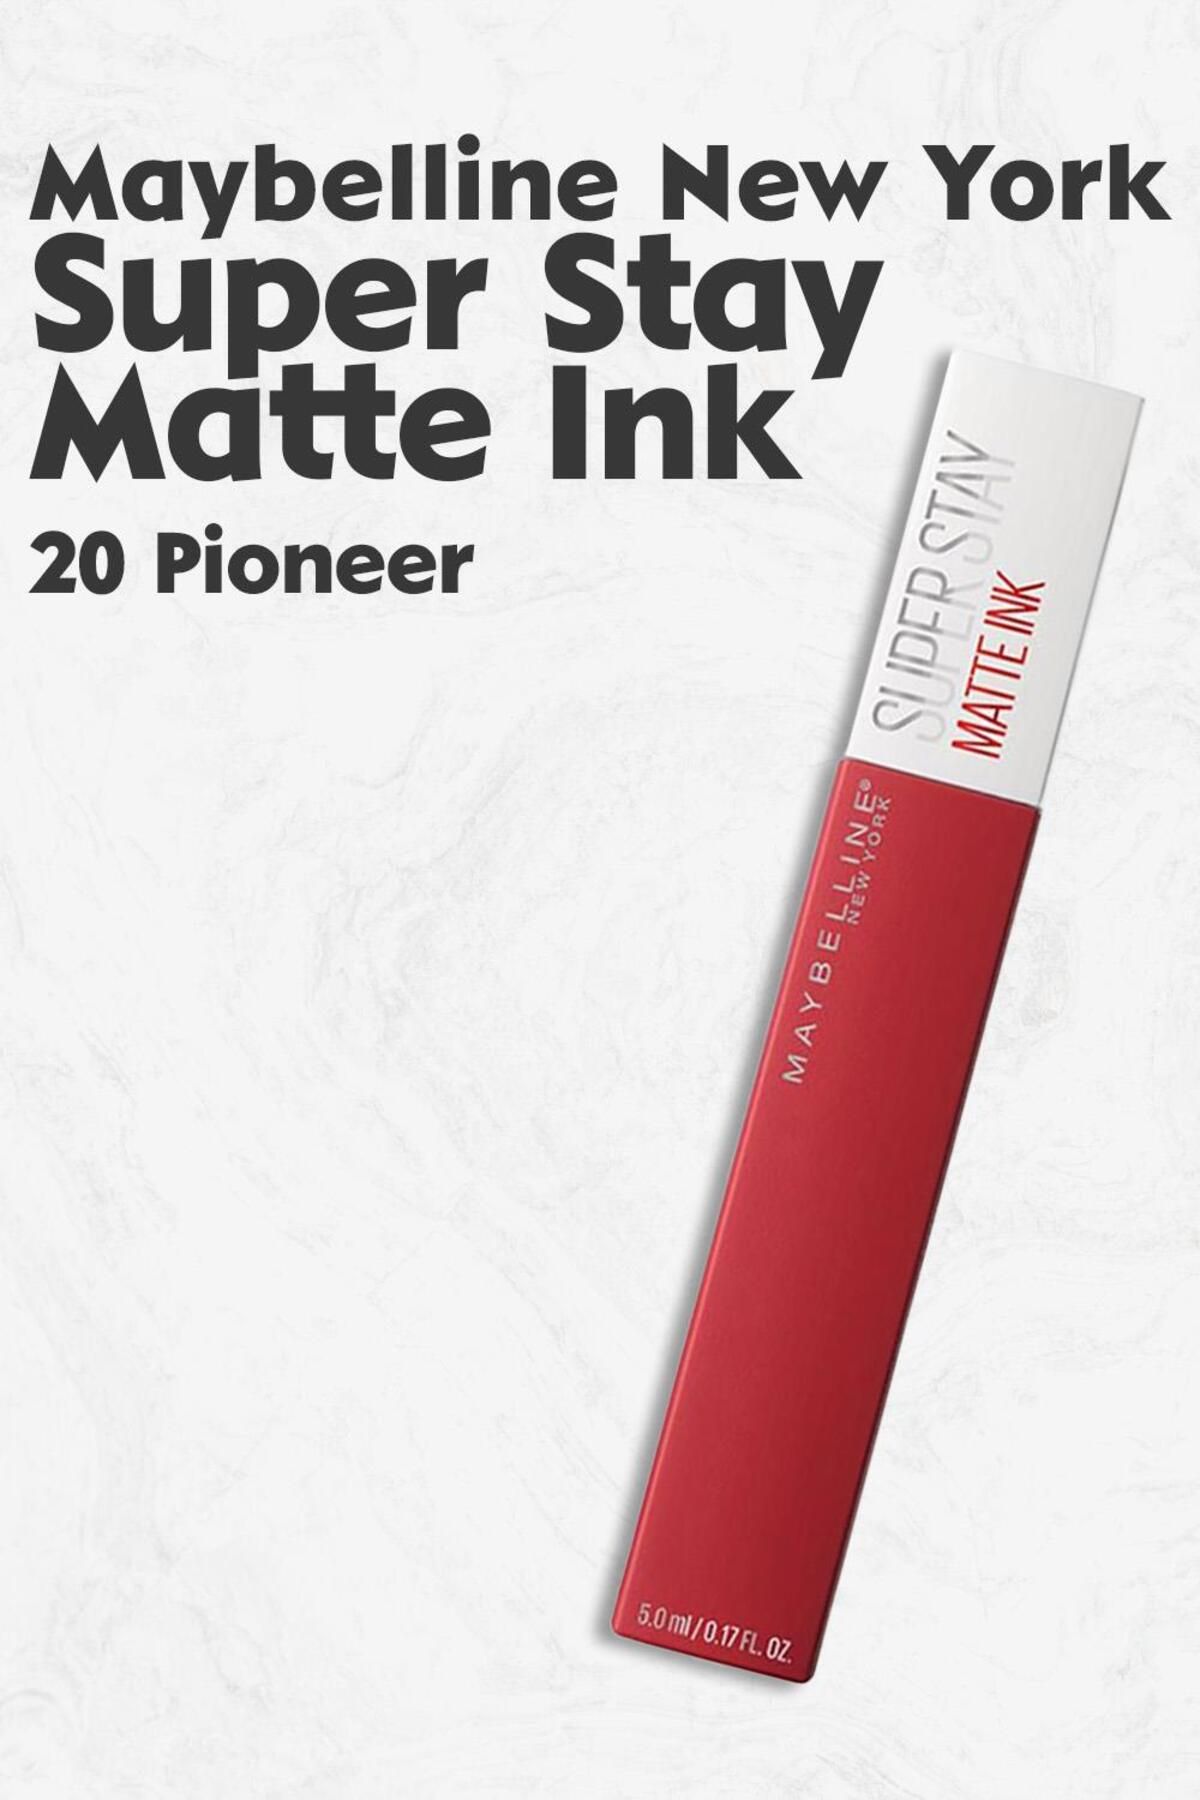 Maybelline New York Maybelline Super Stay Matte Ink 20 Pioneer